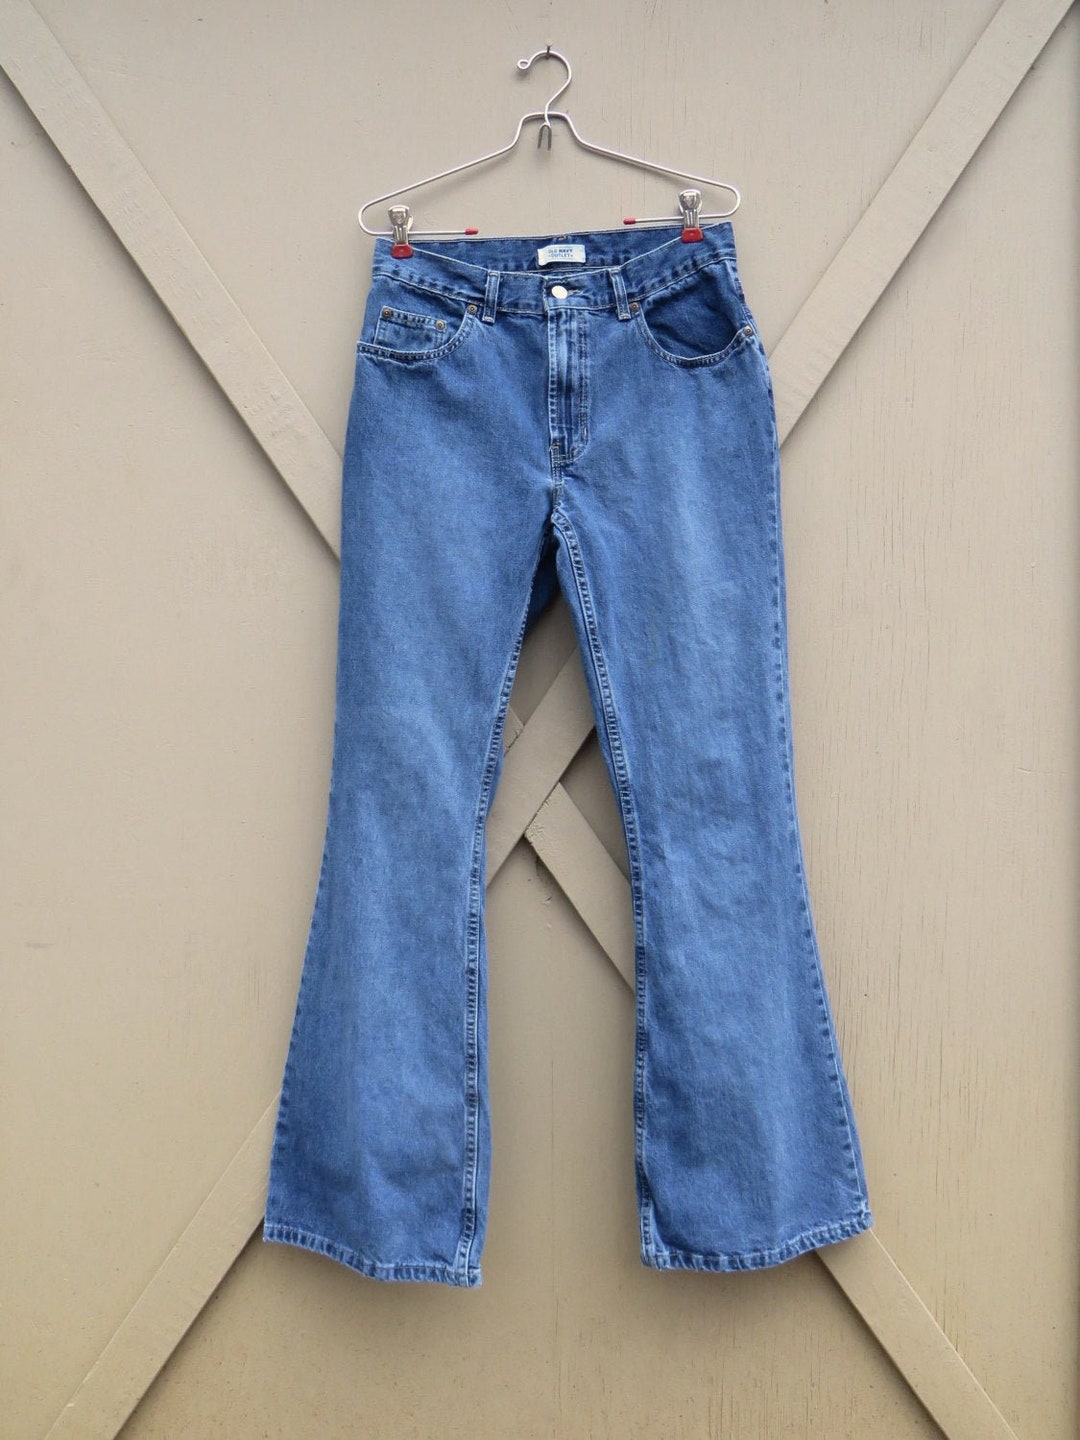 90s Vintage High Waist Faded Dark Wash Denim Flare Jeans - Etsy